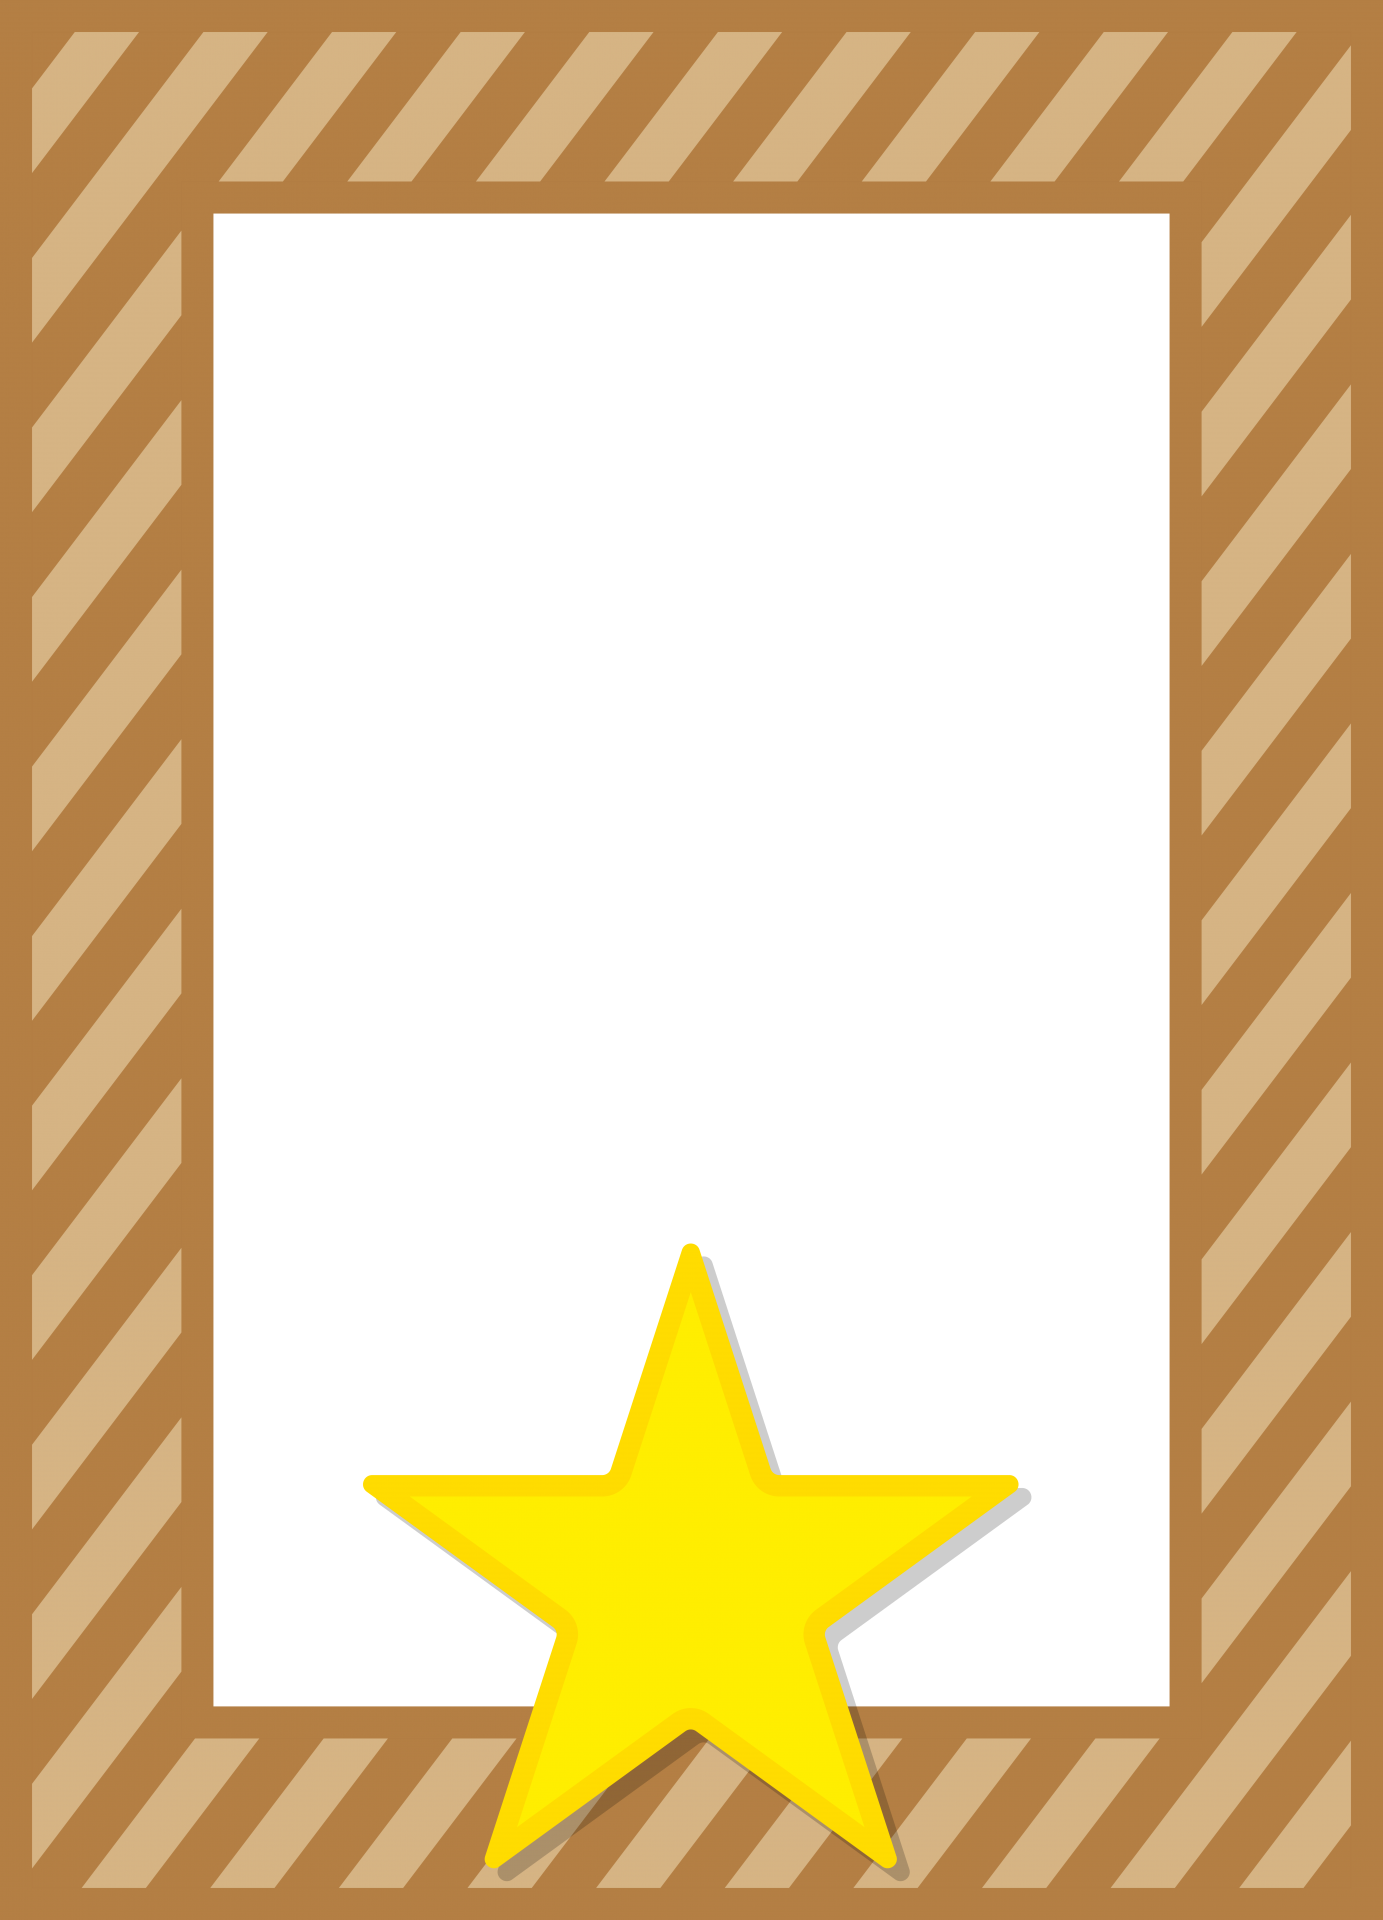 Star Award Frame